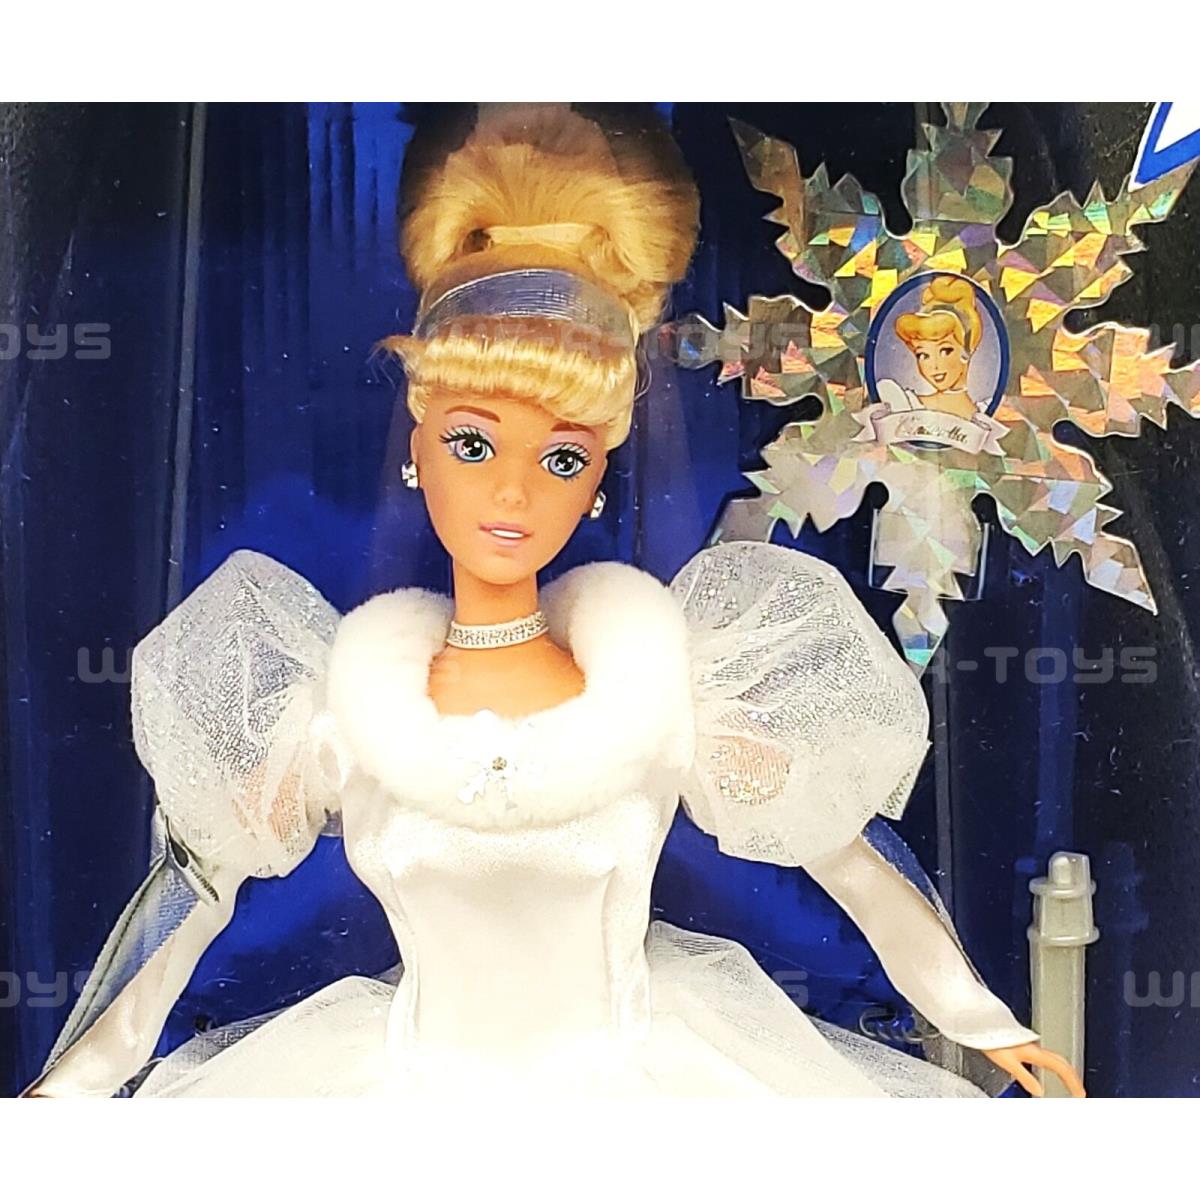 Disney Holiday Princess Cinderella Doll Special Edition 1996 Mattel 16090